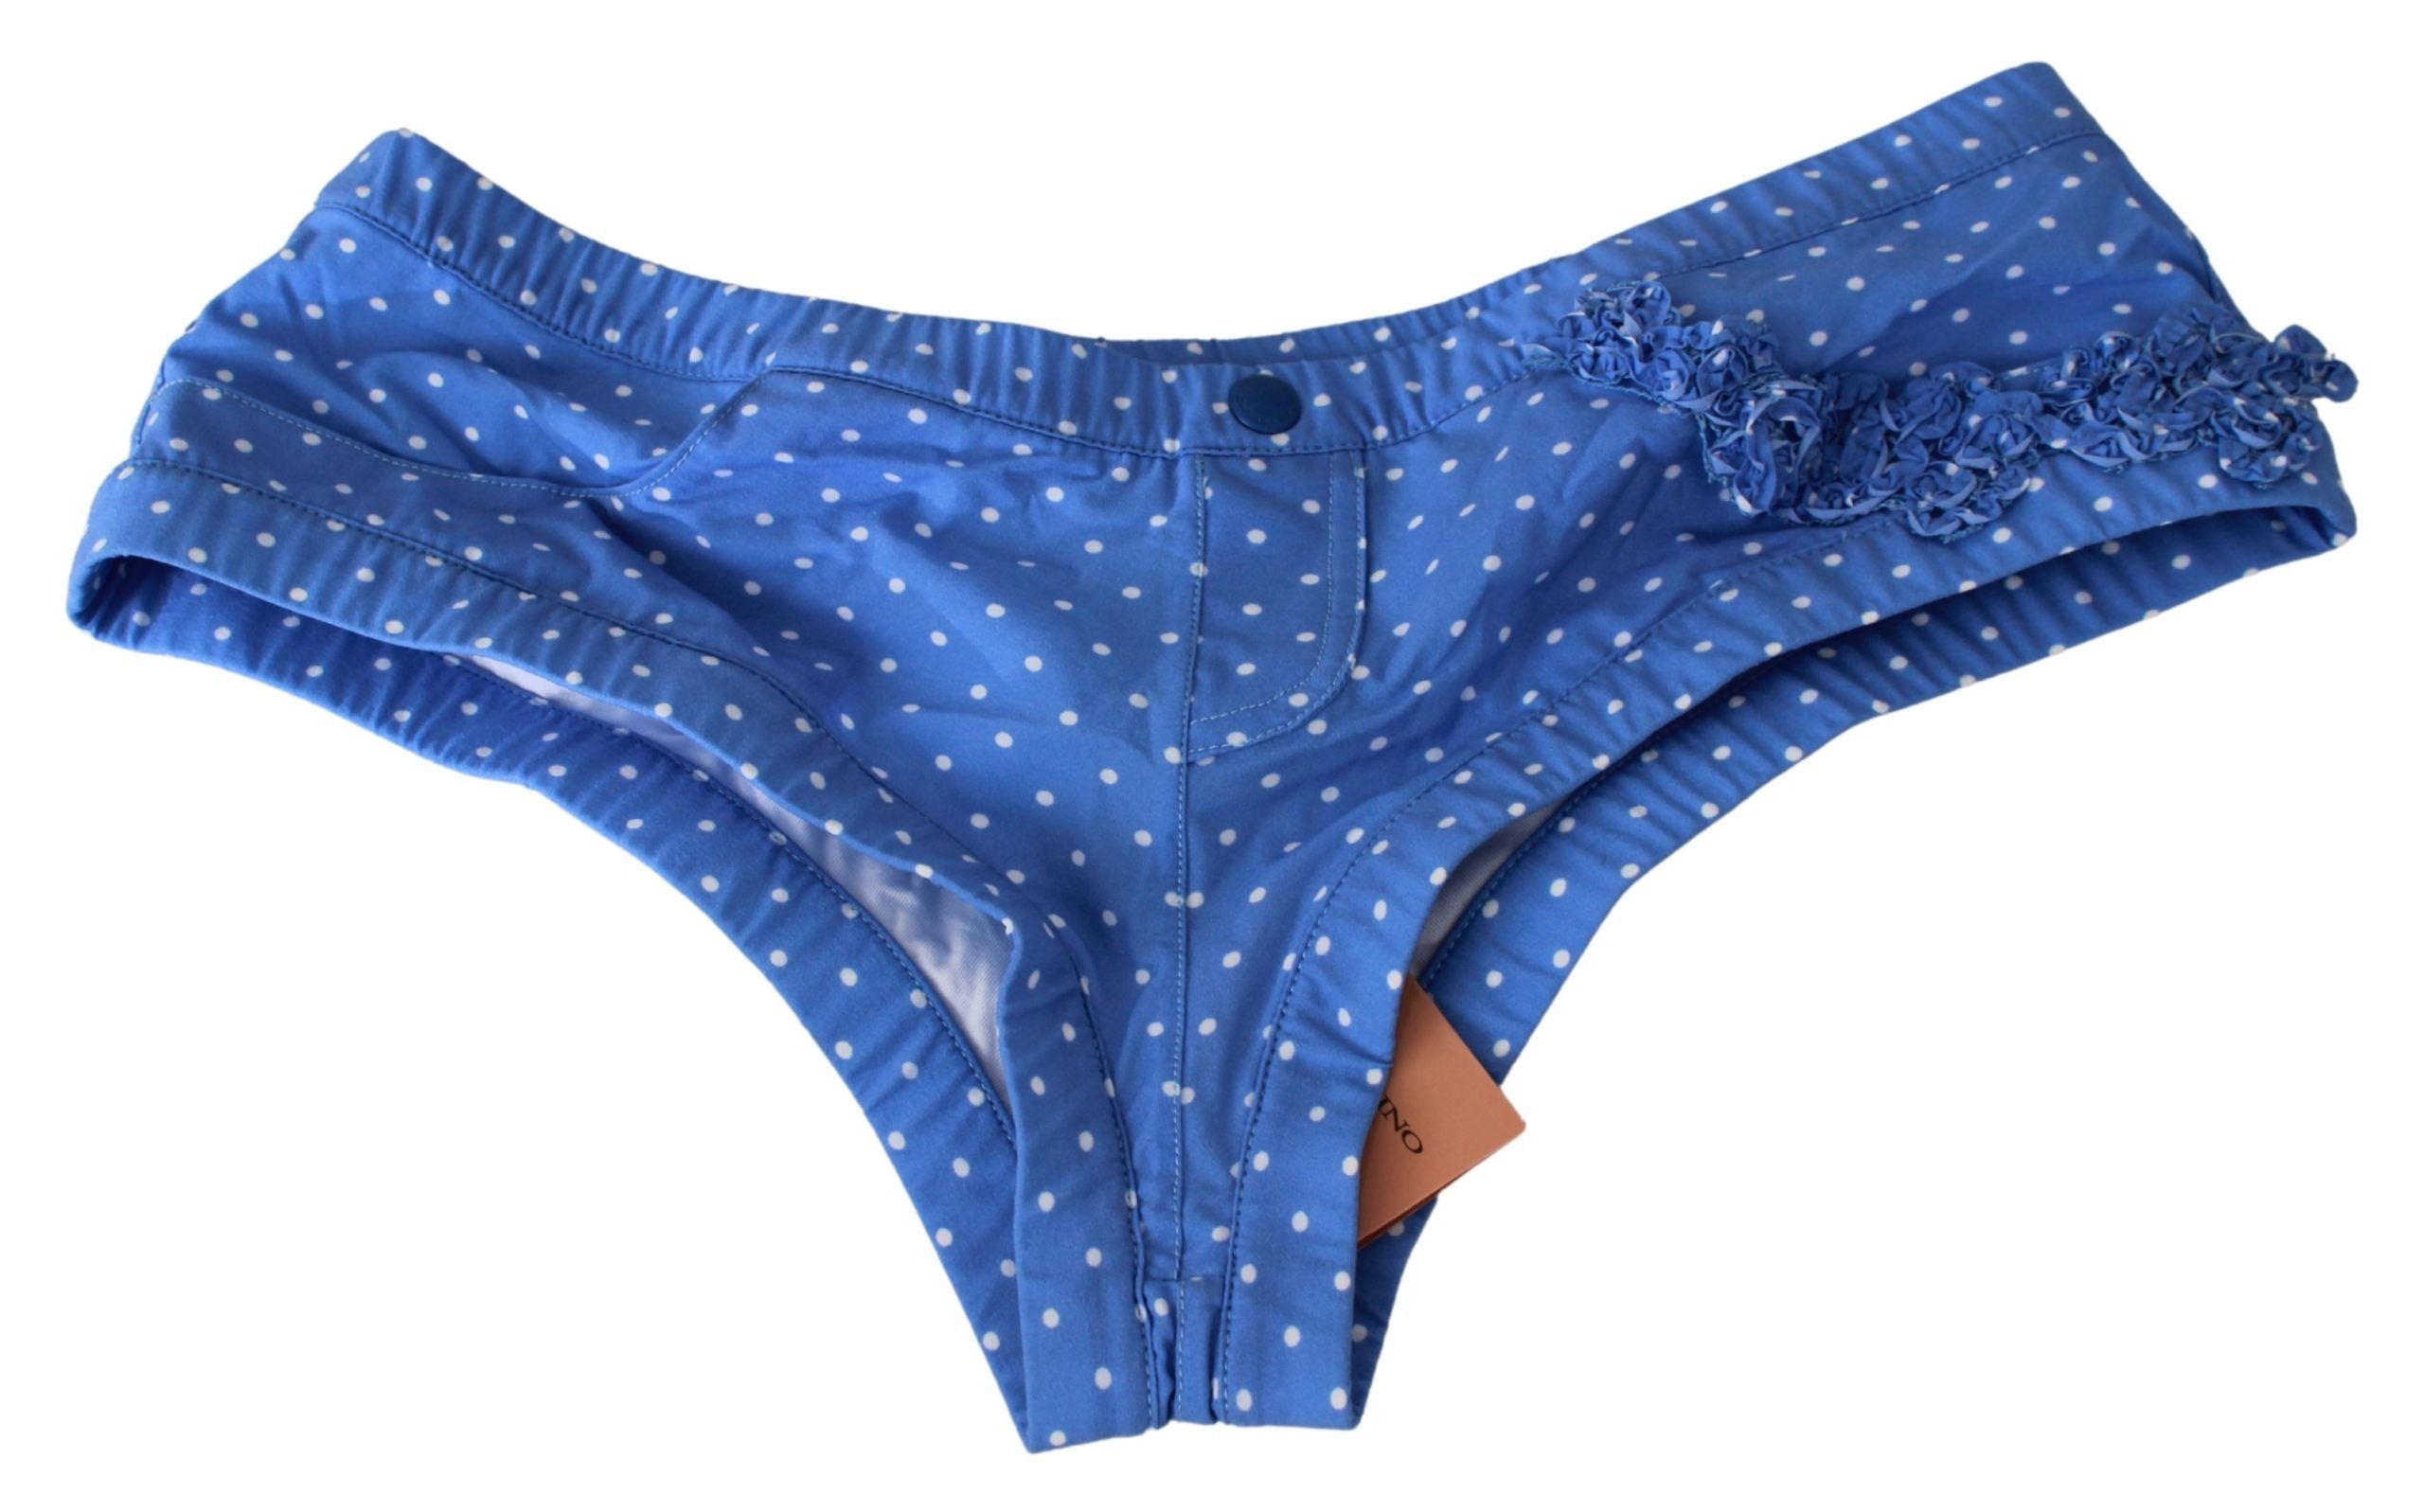 Ermanno Scervino Blue Shorts Beachwear Bikini Bottoms Swimsuit